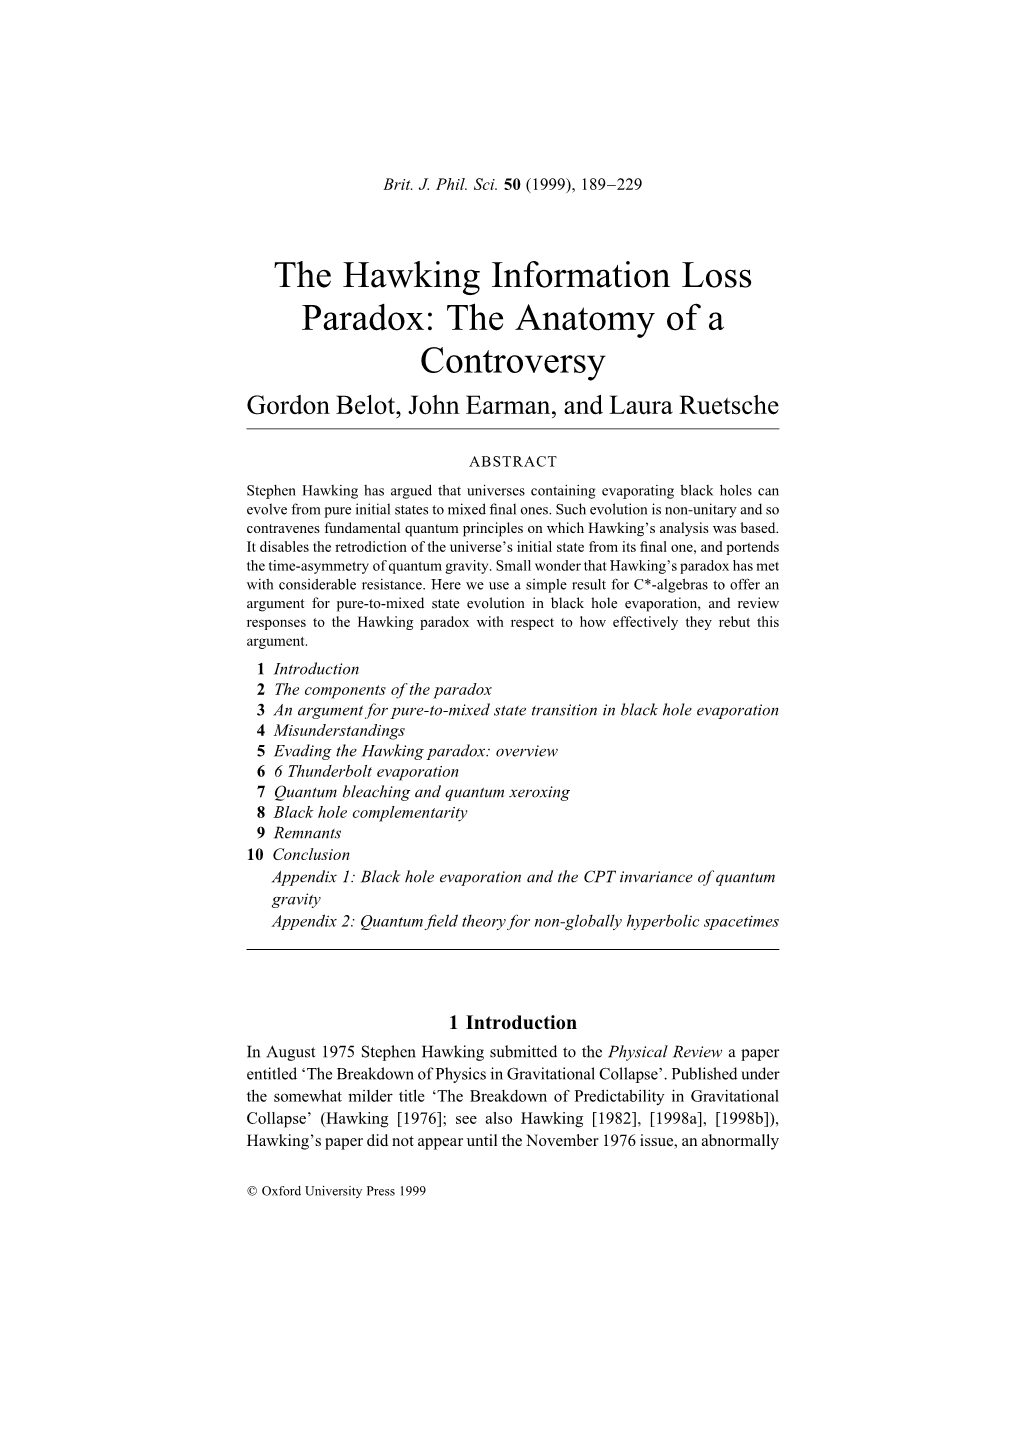 The Hawking Information Loss Paradox: the Anatomy of a Controversy Gordon Belot, John Earman, and Laura Ruetsche